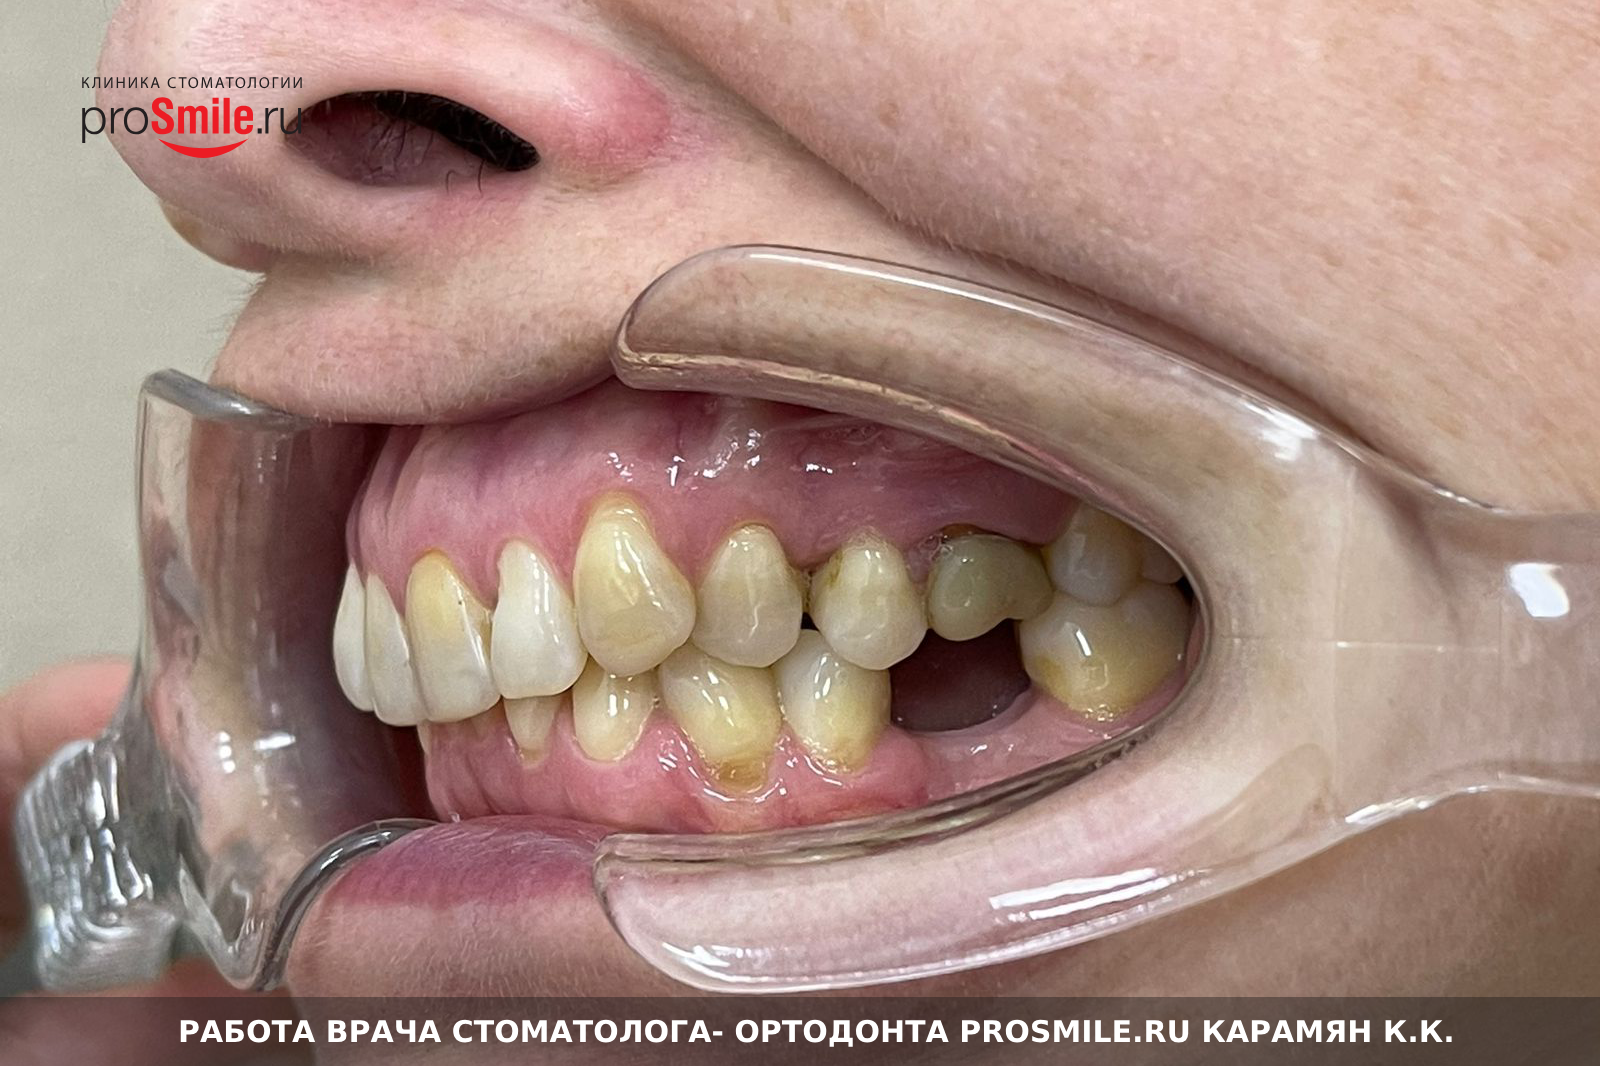 Работа врача стоматолога-ортодонта Просмайл.РУ Карамян К.К.